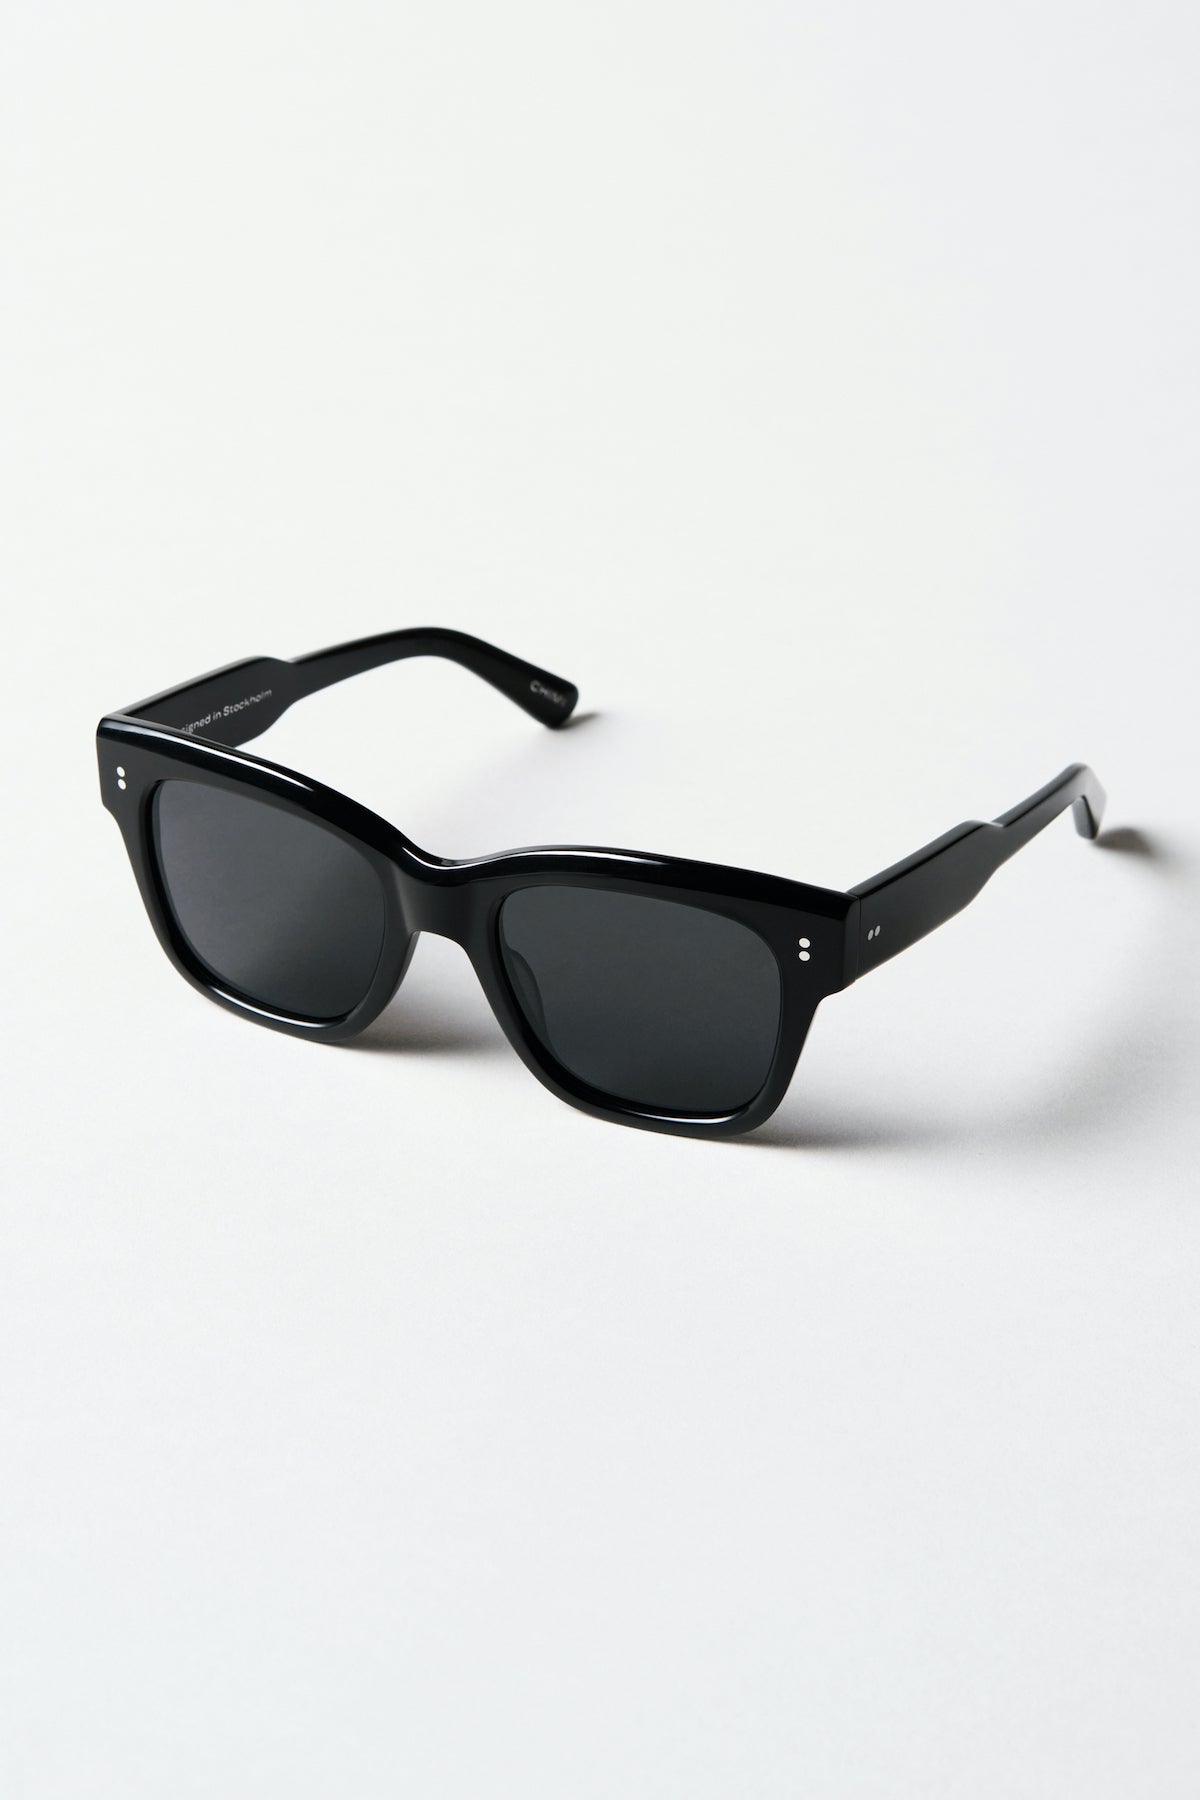 7.2 Chimi Sunglasses Black Side-24653573685441